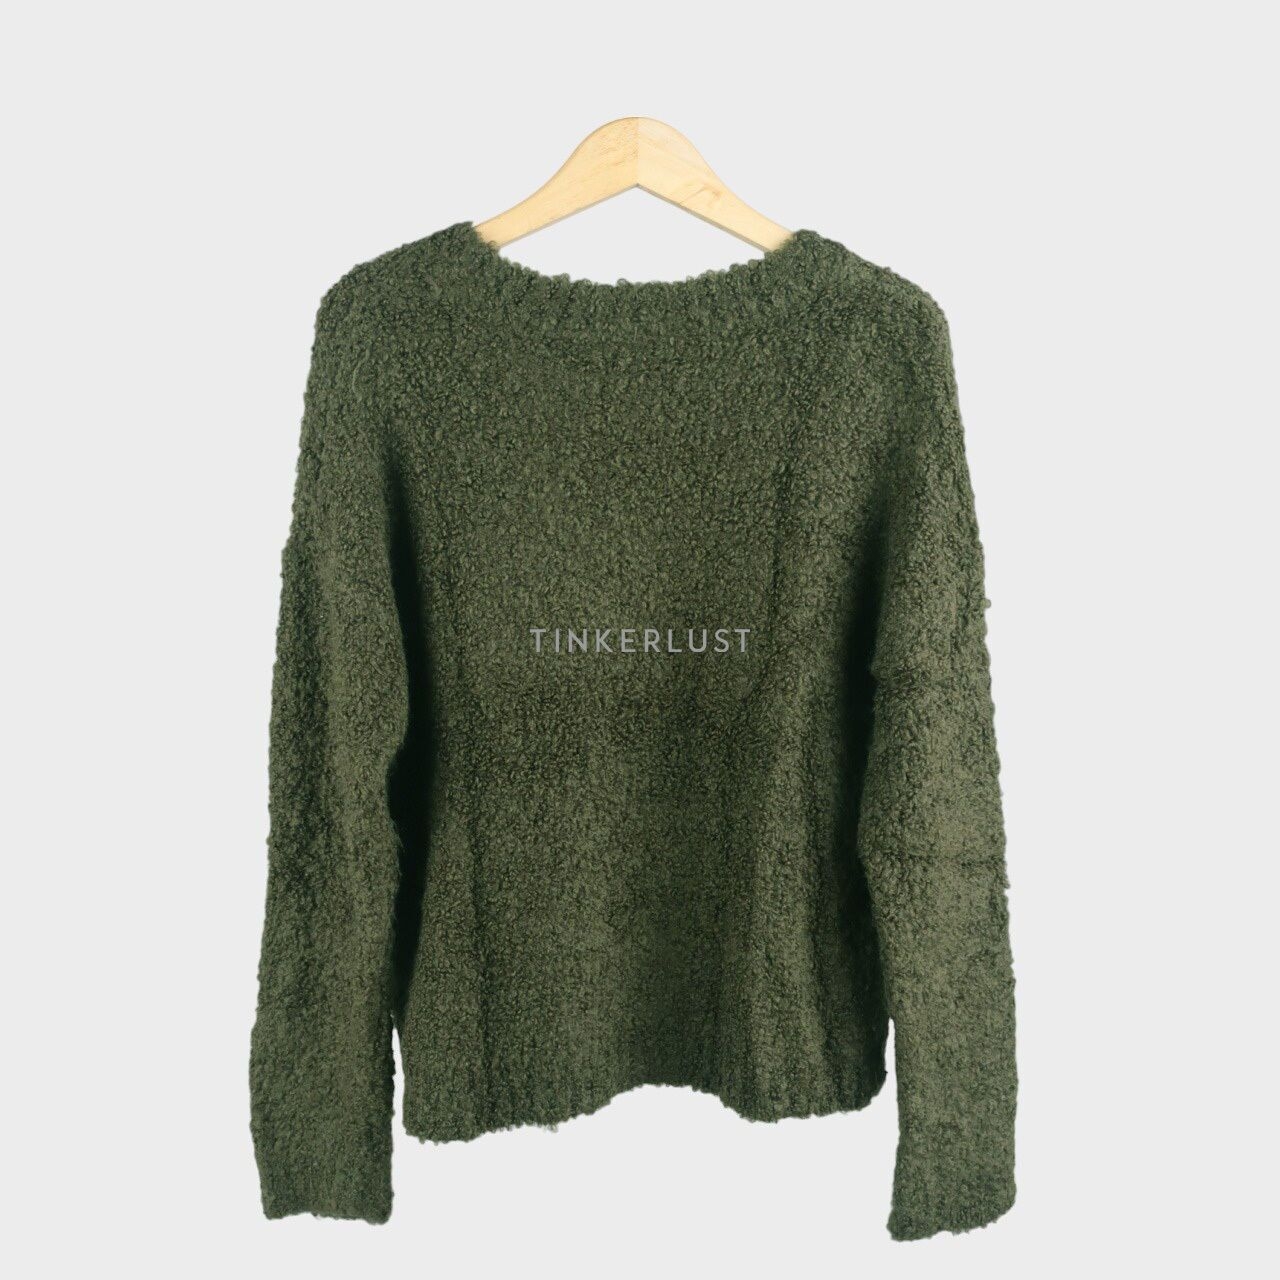 Topshop Dark Green Knit Sweater